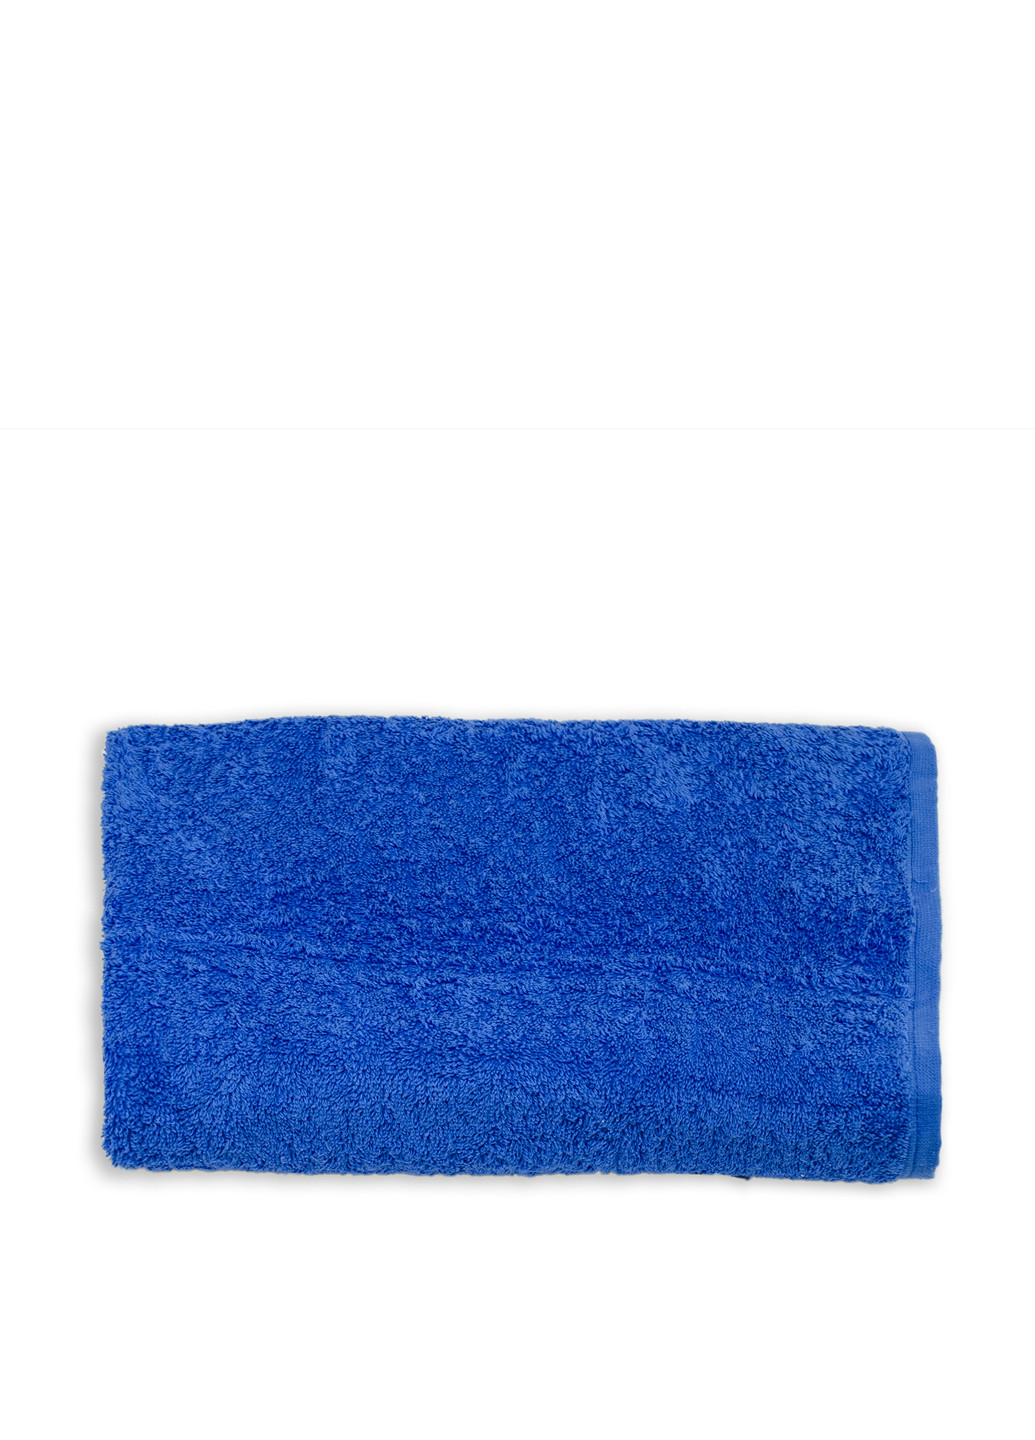 No Brand полотенце, 70х140 см однотонный синий производство - Туркменистан